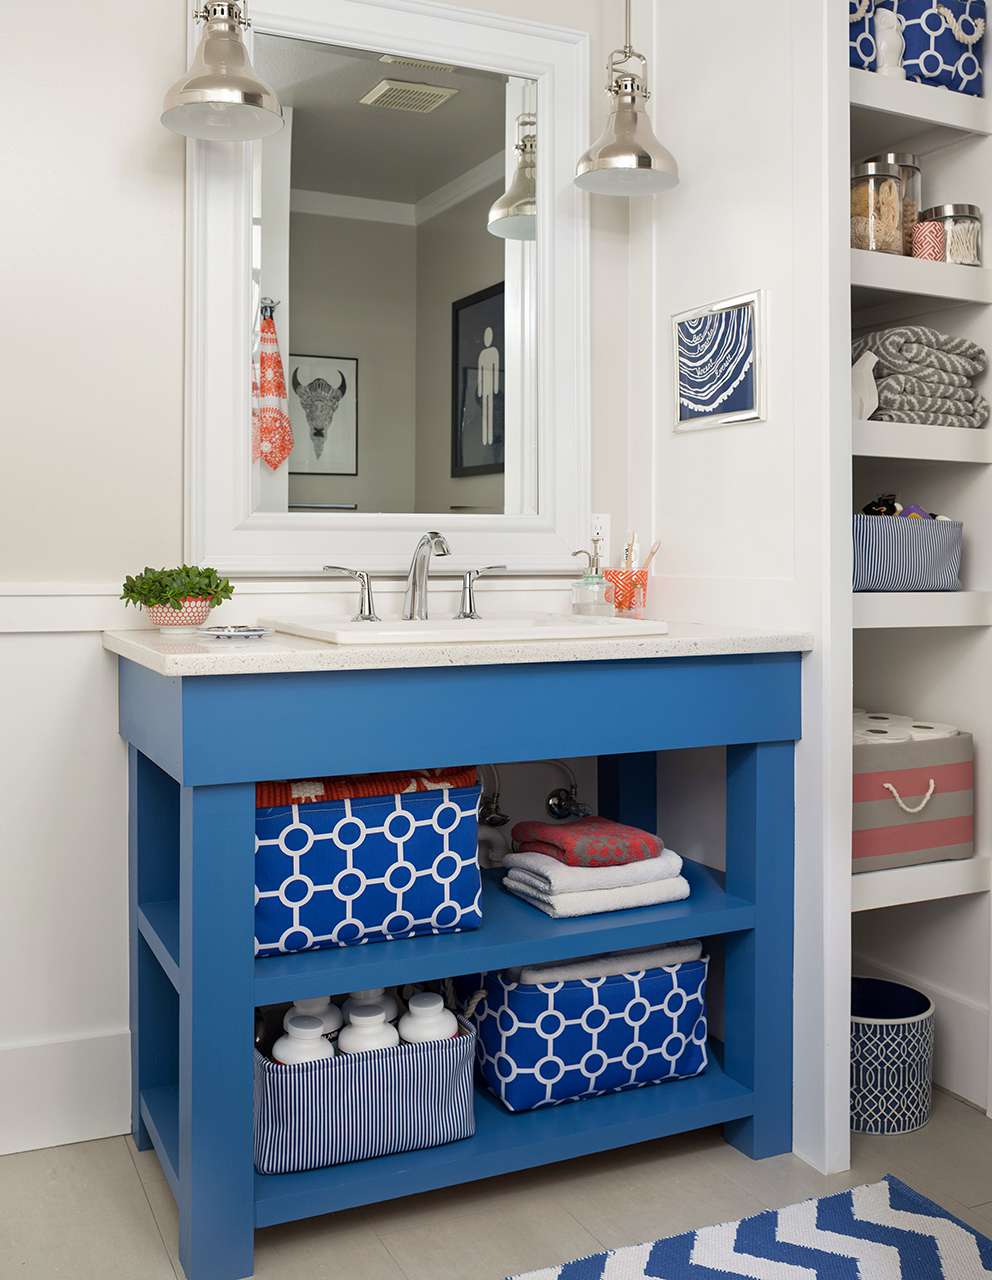 18 Diy Bathroom Vanity Ideas For Custom, Custom Bathroom Vanity Cabinet